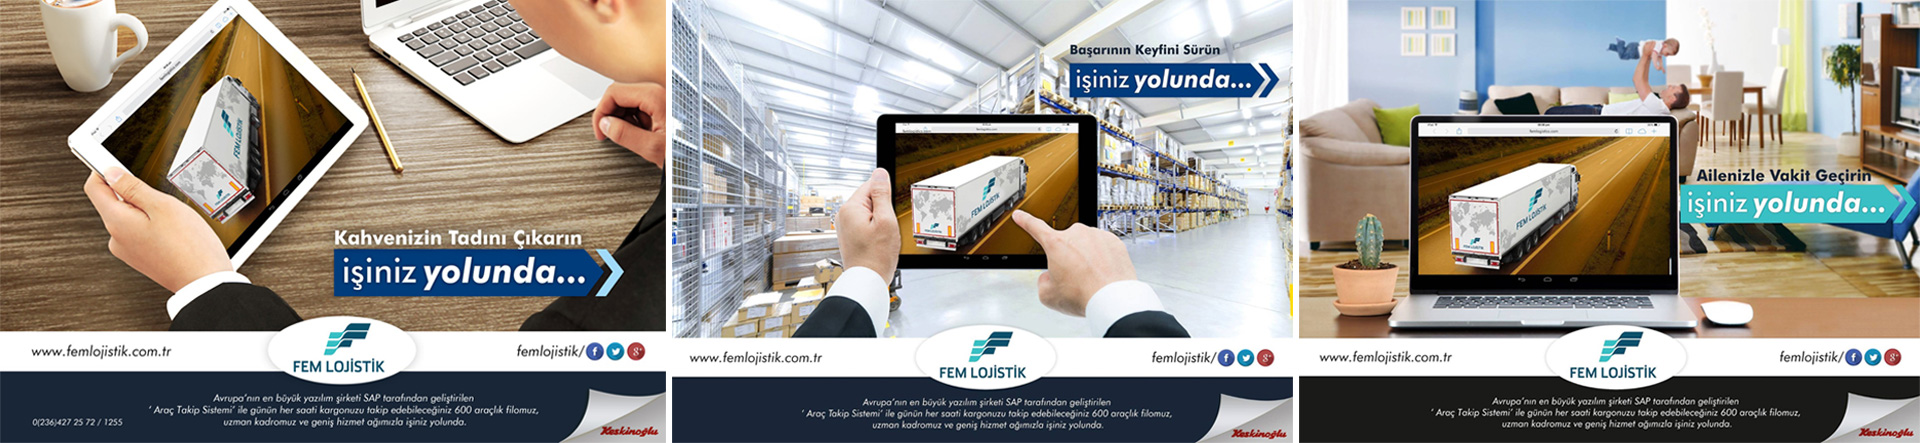 Fem Logistics - KONSEPTIZ Advertising Agency in Turkey